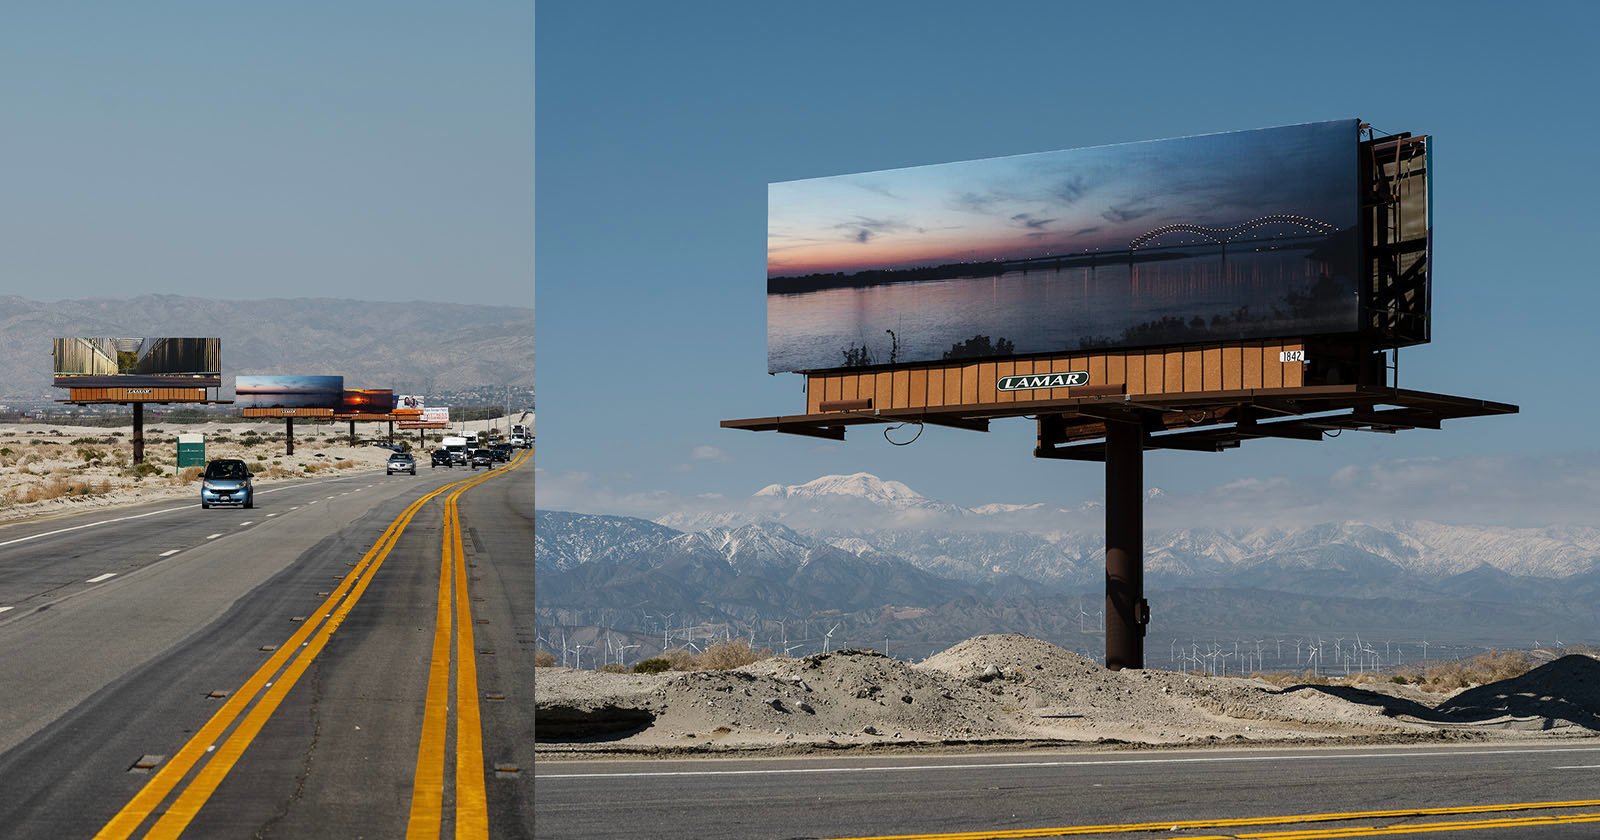 Tyre Nicholss Photography Featured in Californian Desert Billboard Exhibition